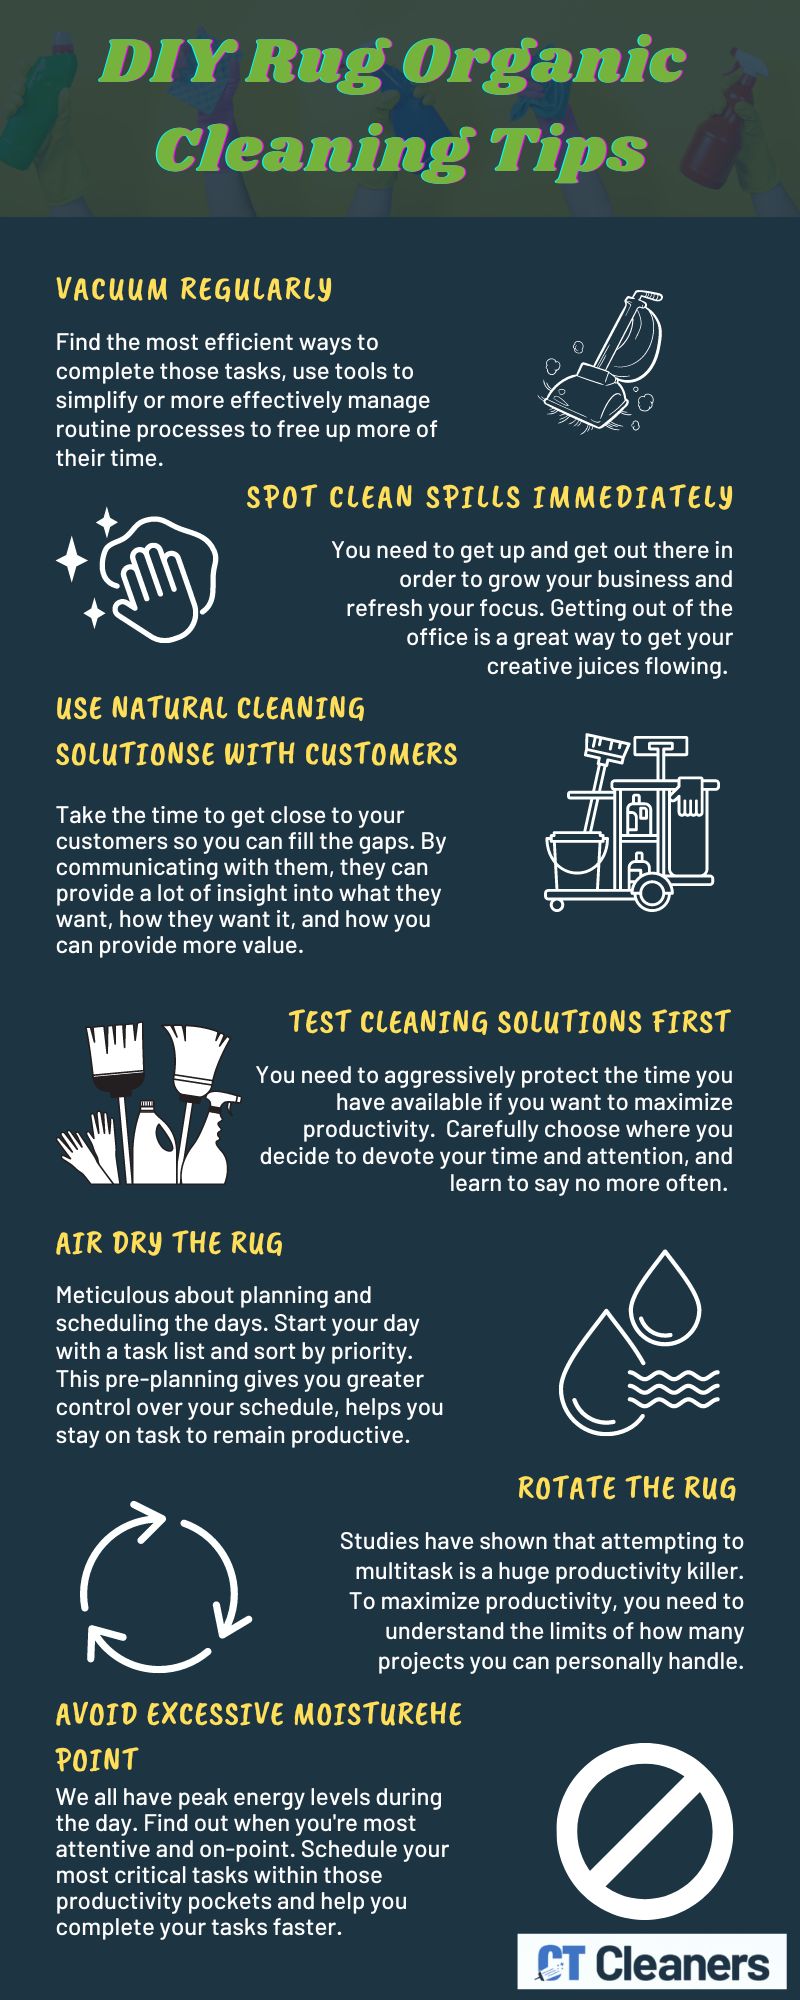 DIY Rug Organic Cleaning Tips